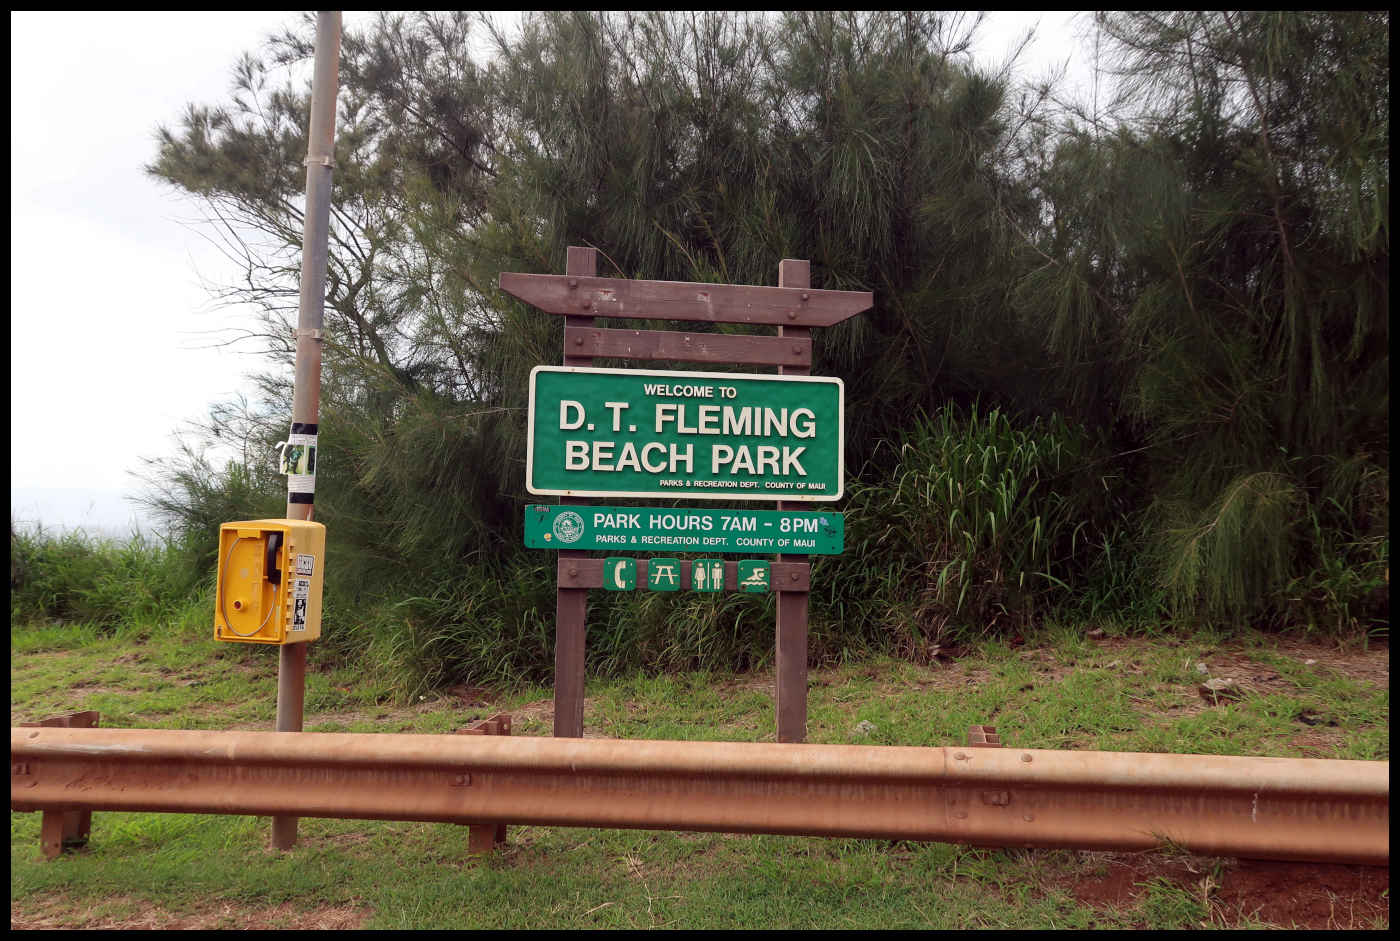 D.T. Fleming Beach Park